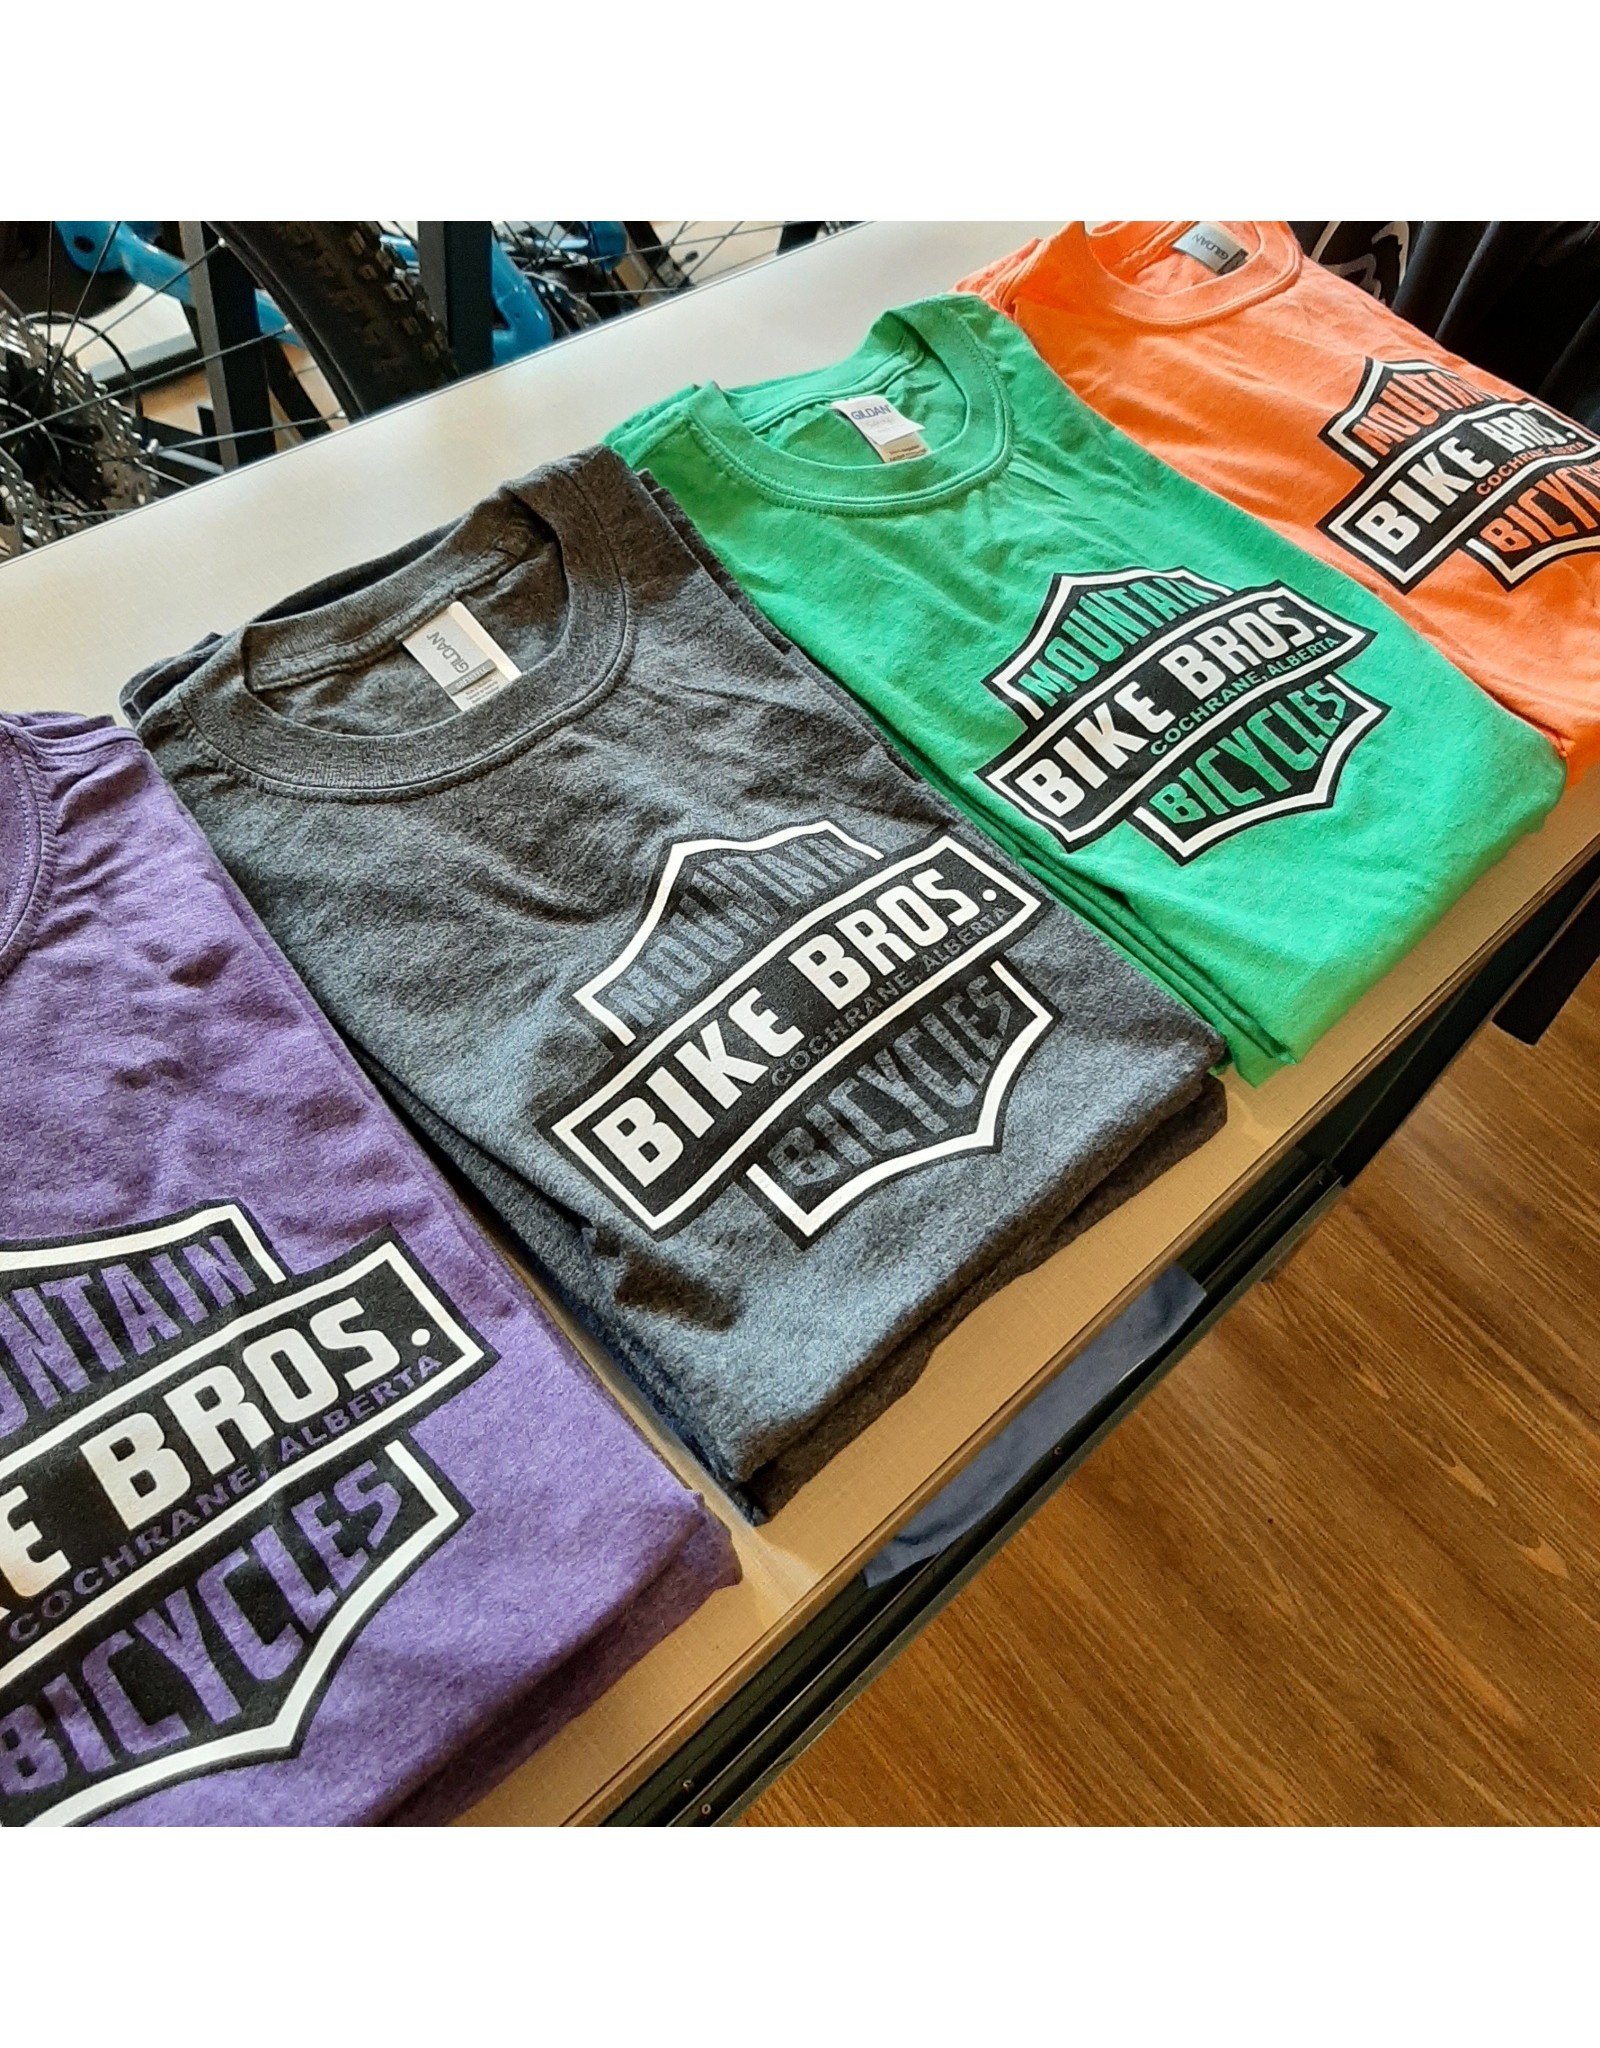 Bike Bros. Kinda Crest T-shirt  - Bike Bros.